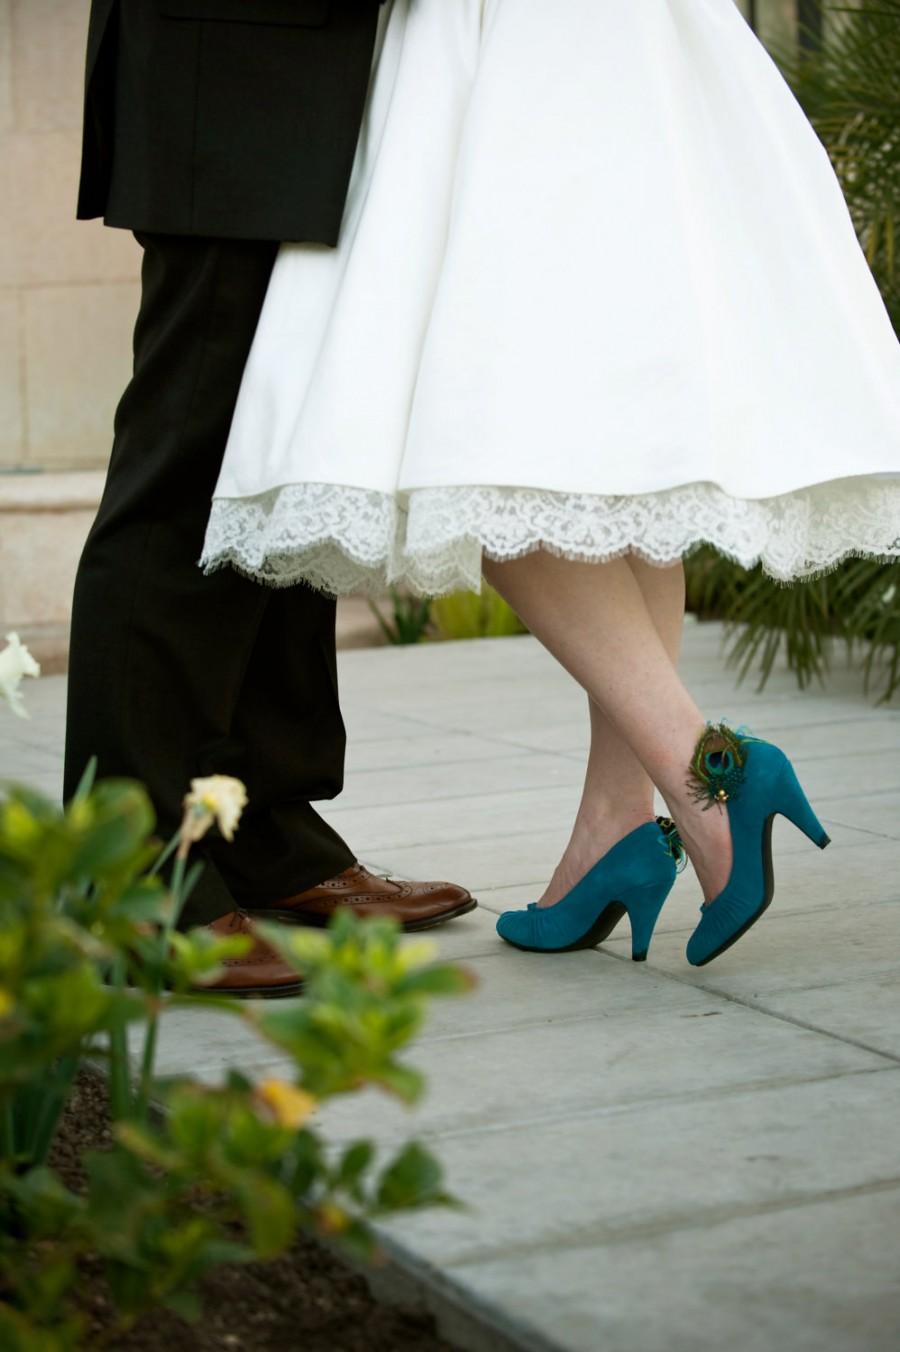 زفاف - Peacock Wedding Shoe Clips Teal Turquoise Lime Green Feather Gold Bead Clusters Rhinestone Bride Bridesmaid FAELYNN Something Blue Customize